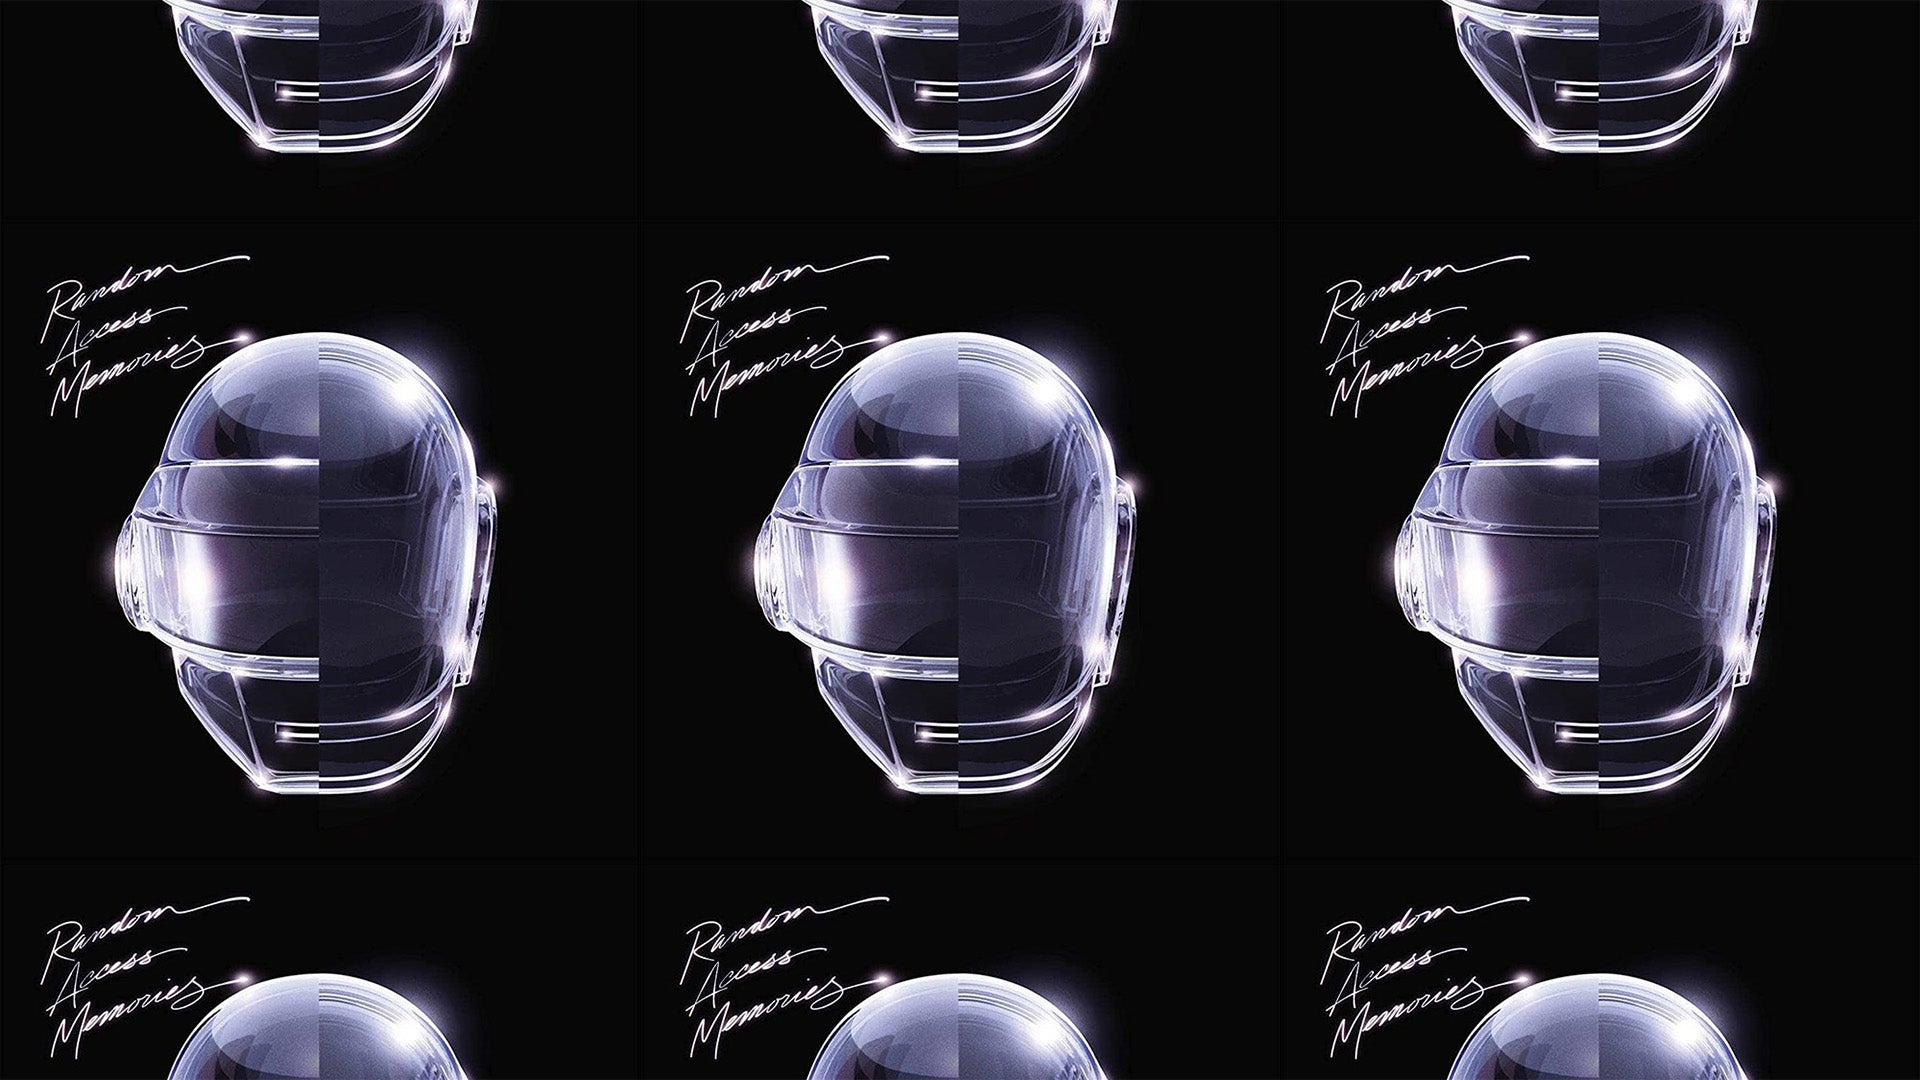 See Daft Punk, Julian Casablancas' 'Infinity Repeating' Video